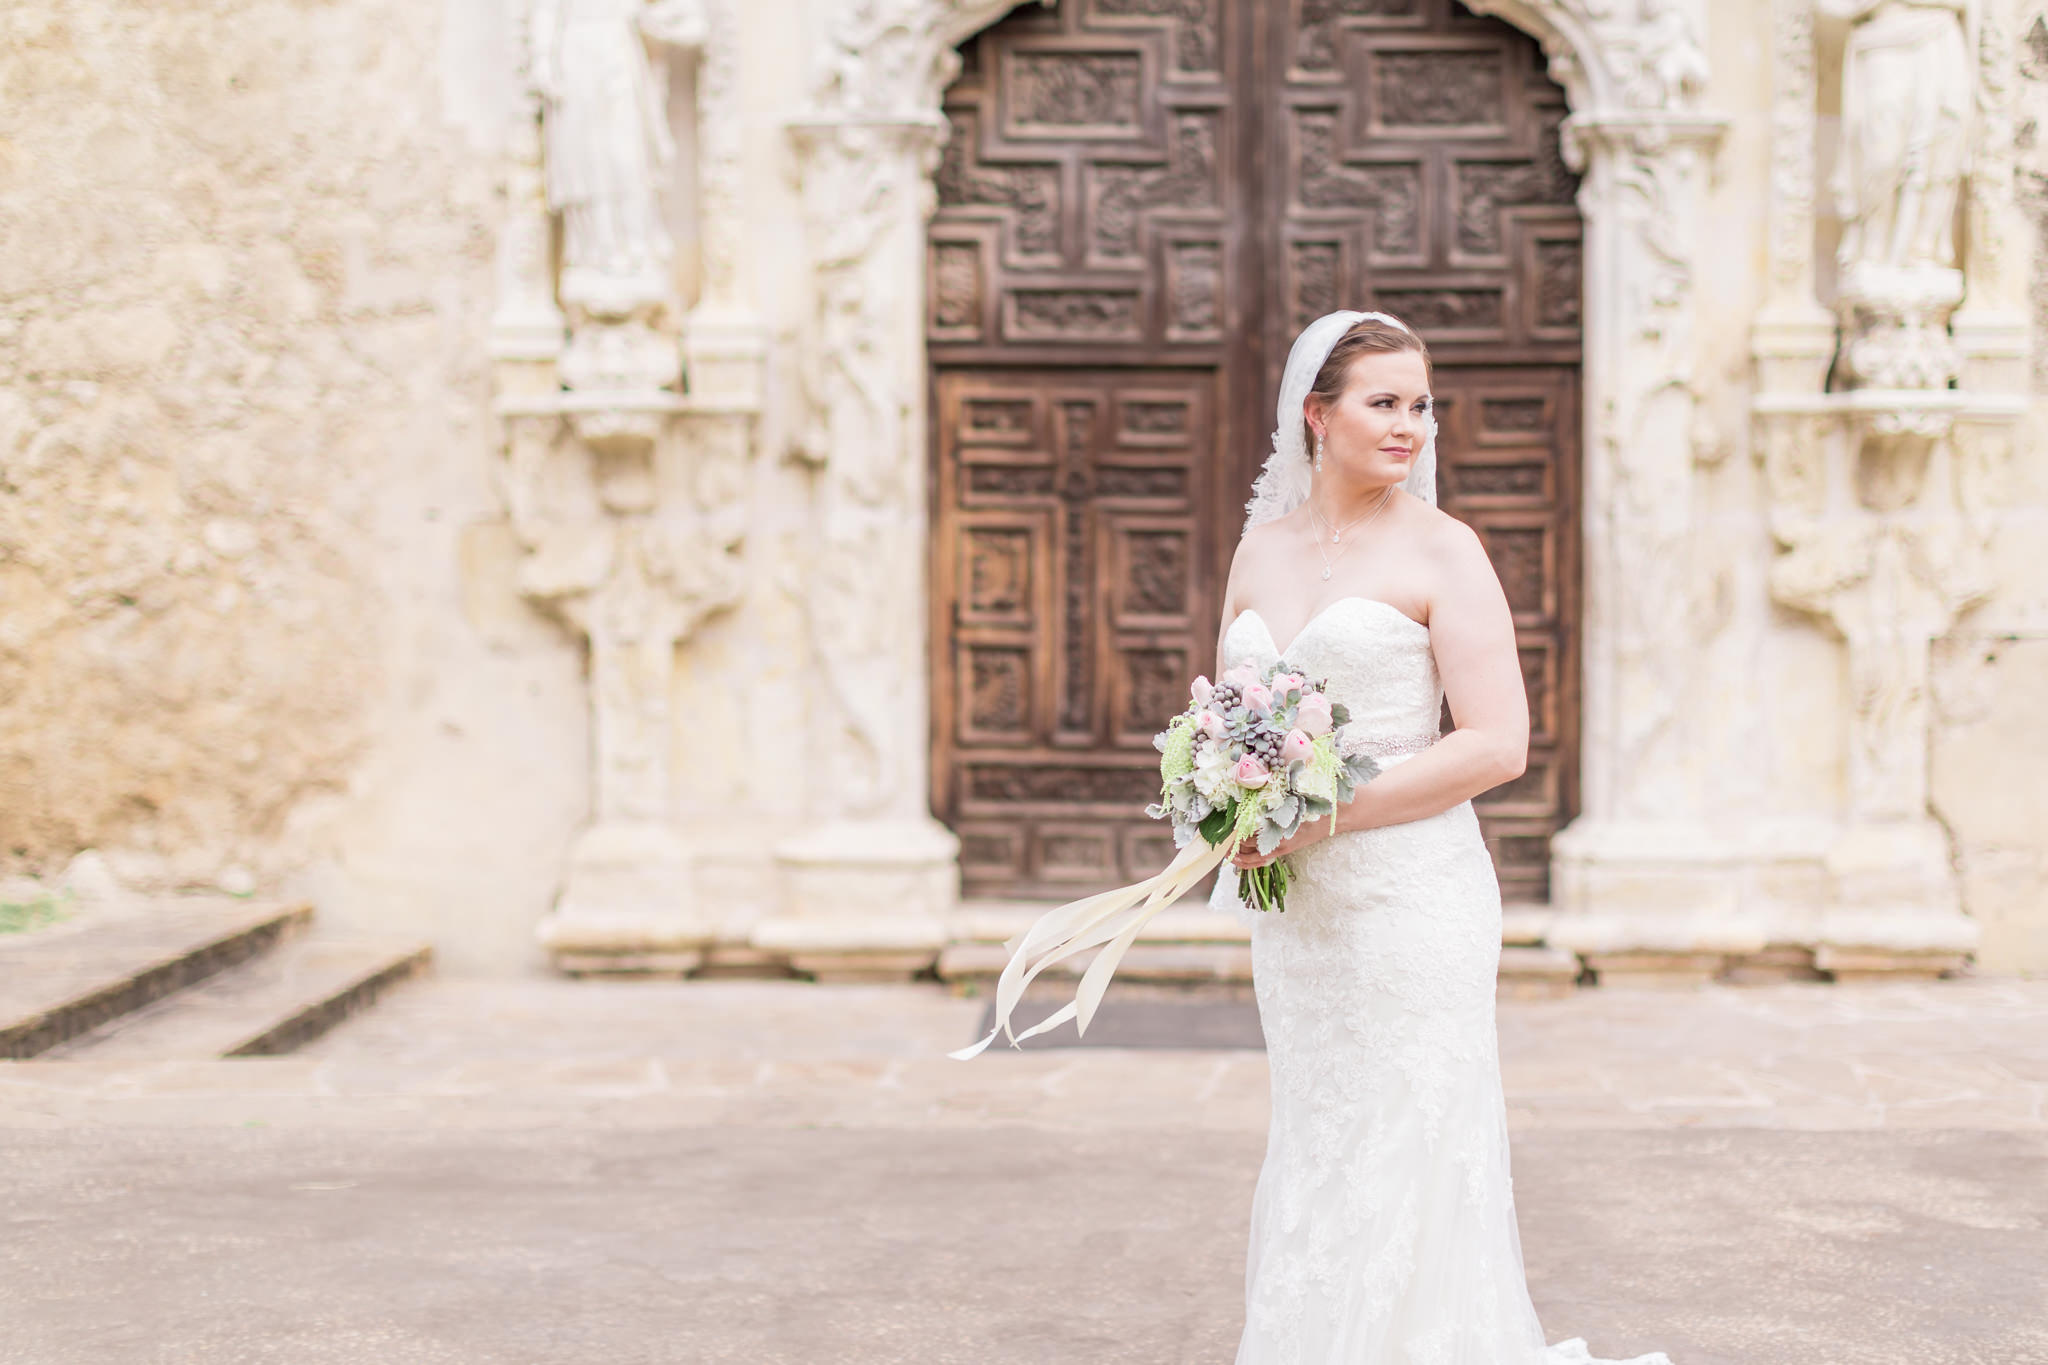 An Elegant Bridal Session at Mission San Jose in San Antonio, TX by Dawn Elizabeth Studios, San Antonio Wedding Photographer